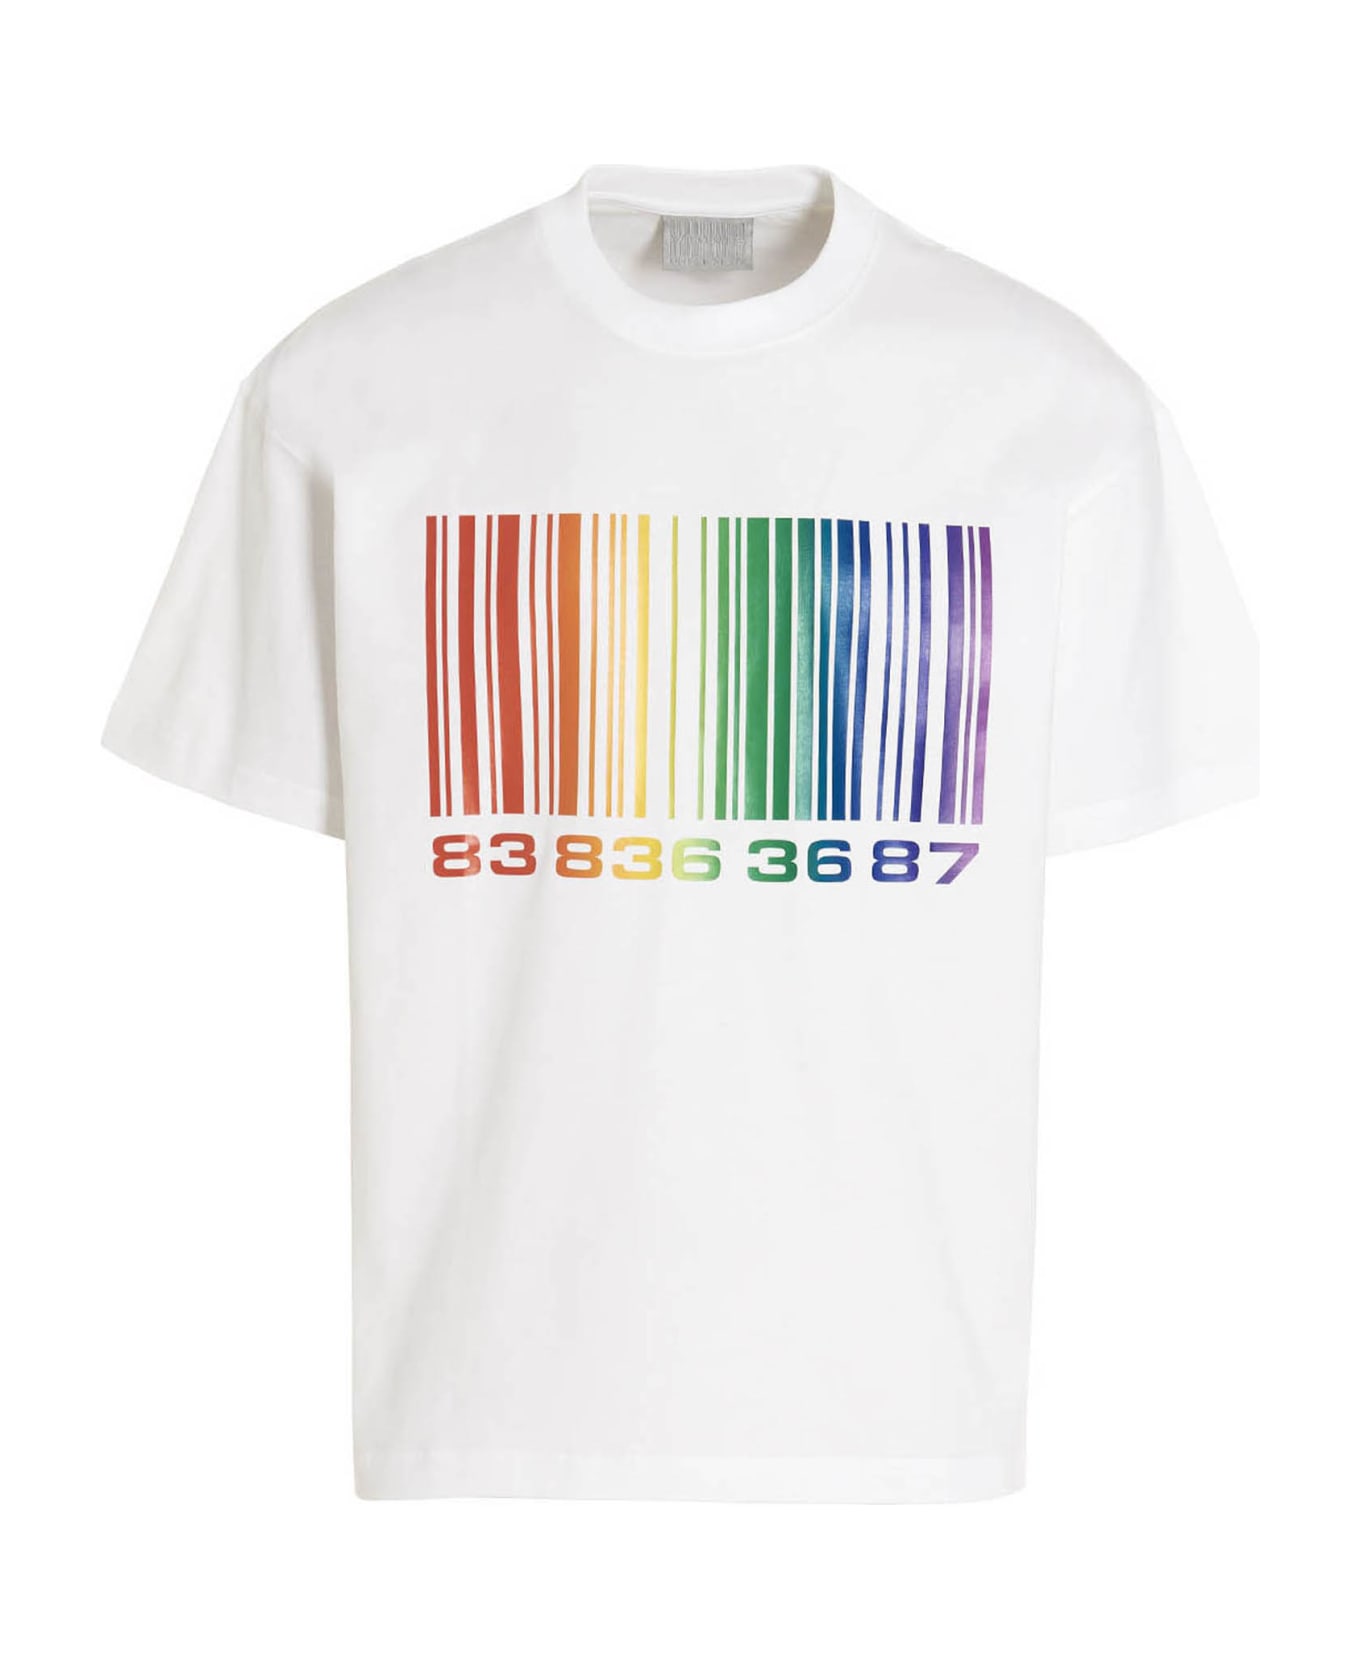 VTMNTS Big Barcode T-shirt - White Rainbow